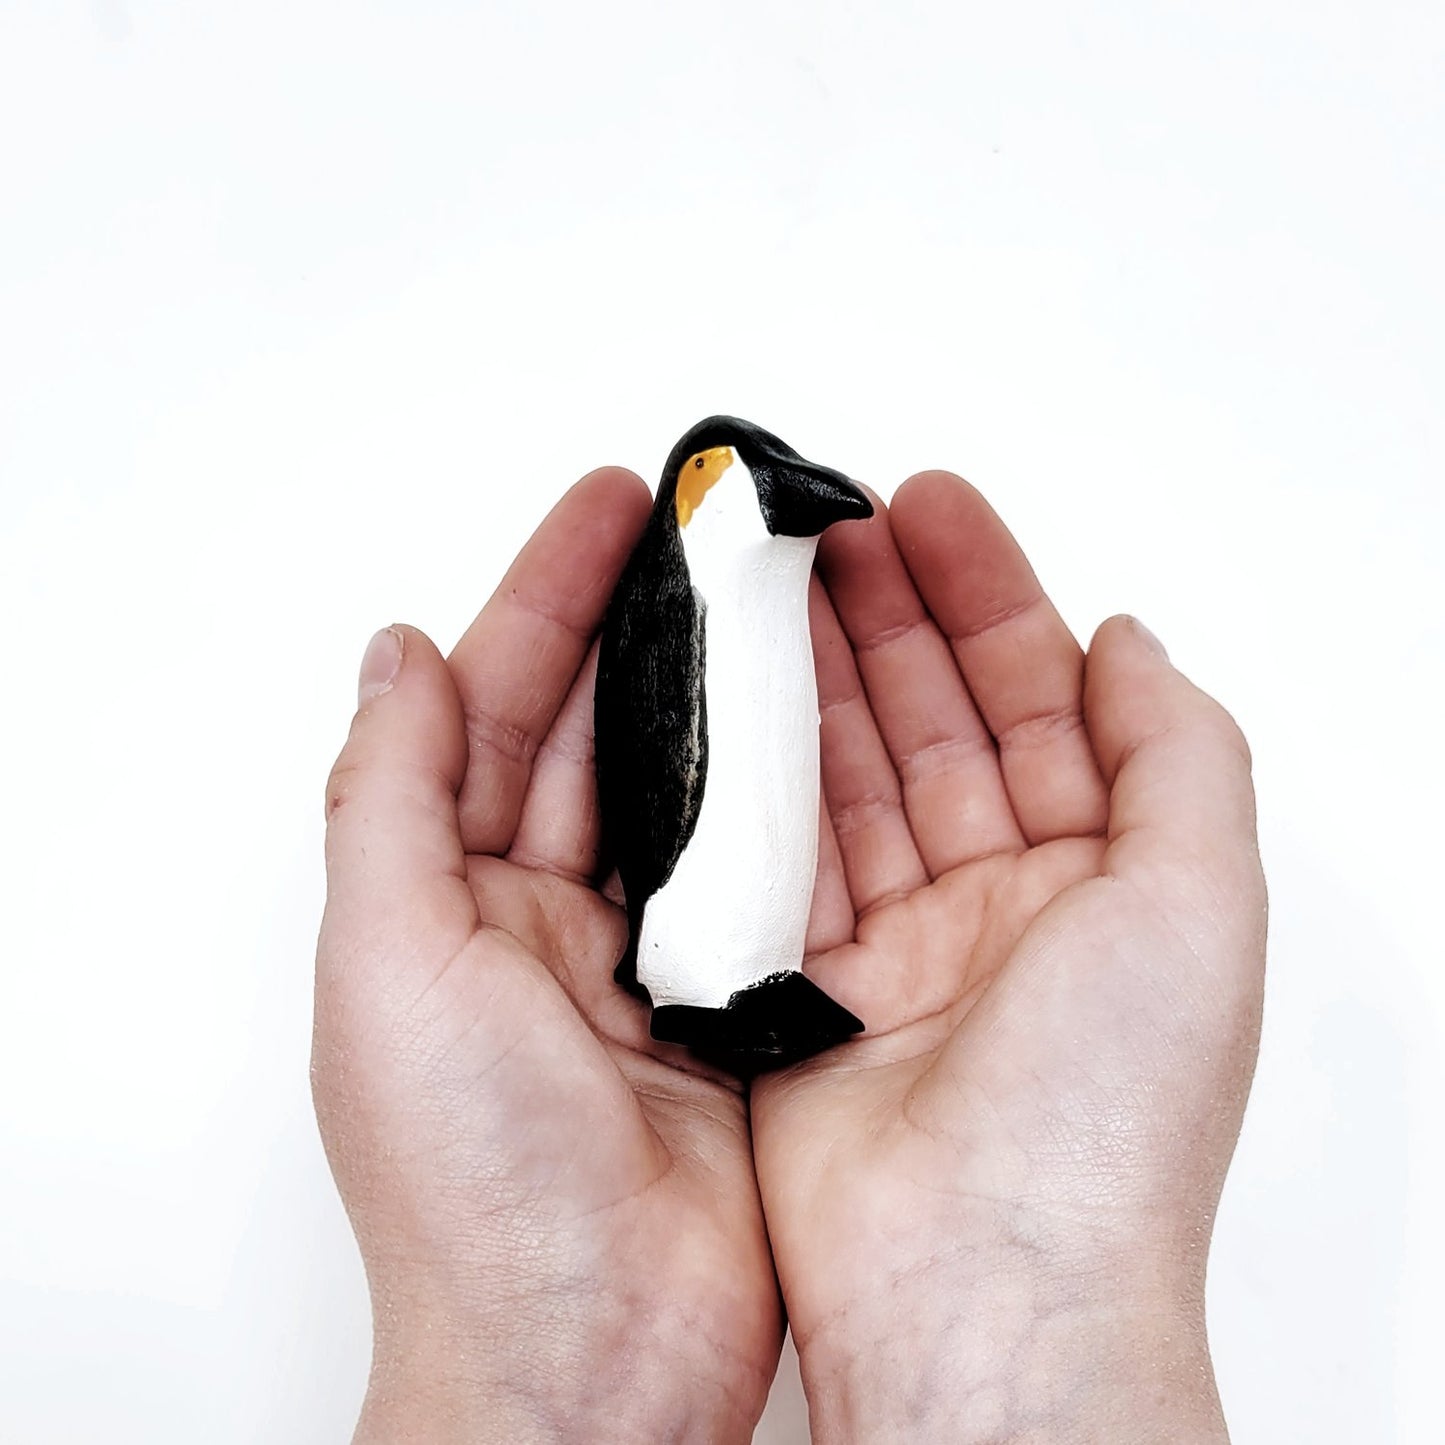 Percival the Penguin